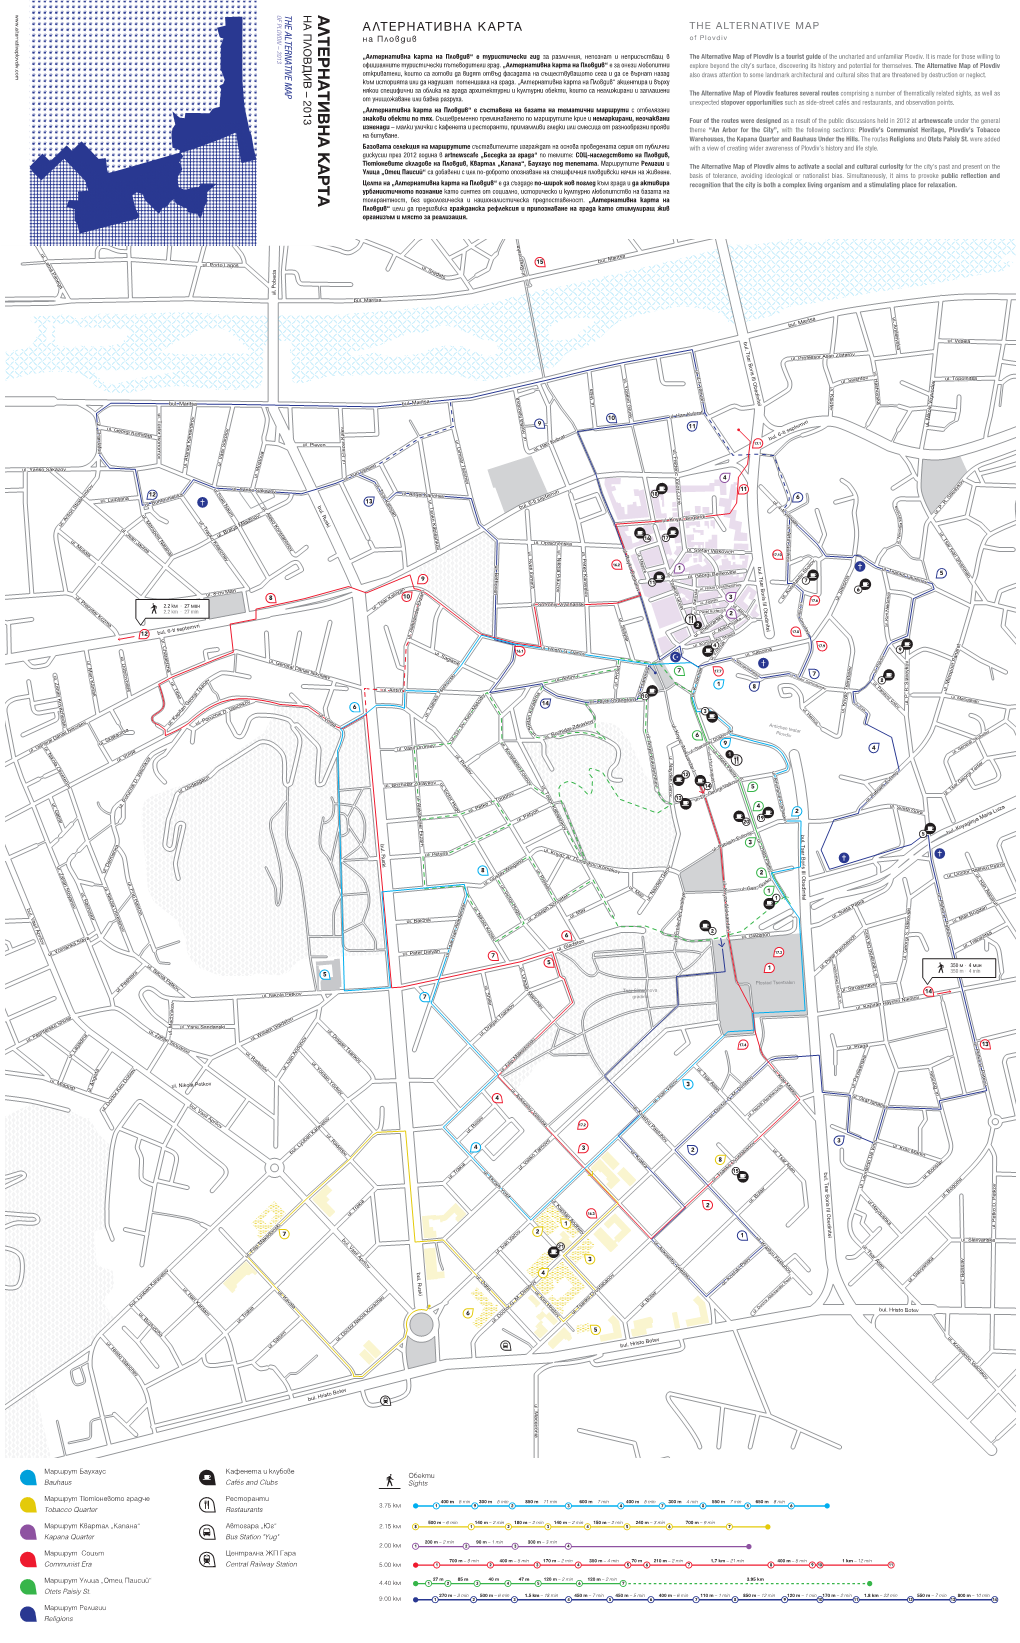 2013 the ALTERNATIVE MAP НА ПЛОВДИВ – 2013 АЛТЕРНАТИВНА КАРТА АЛТЕРНАТИВНА КАРТА the ALTERNATIVE MAP На Пловдив of Plovdiv